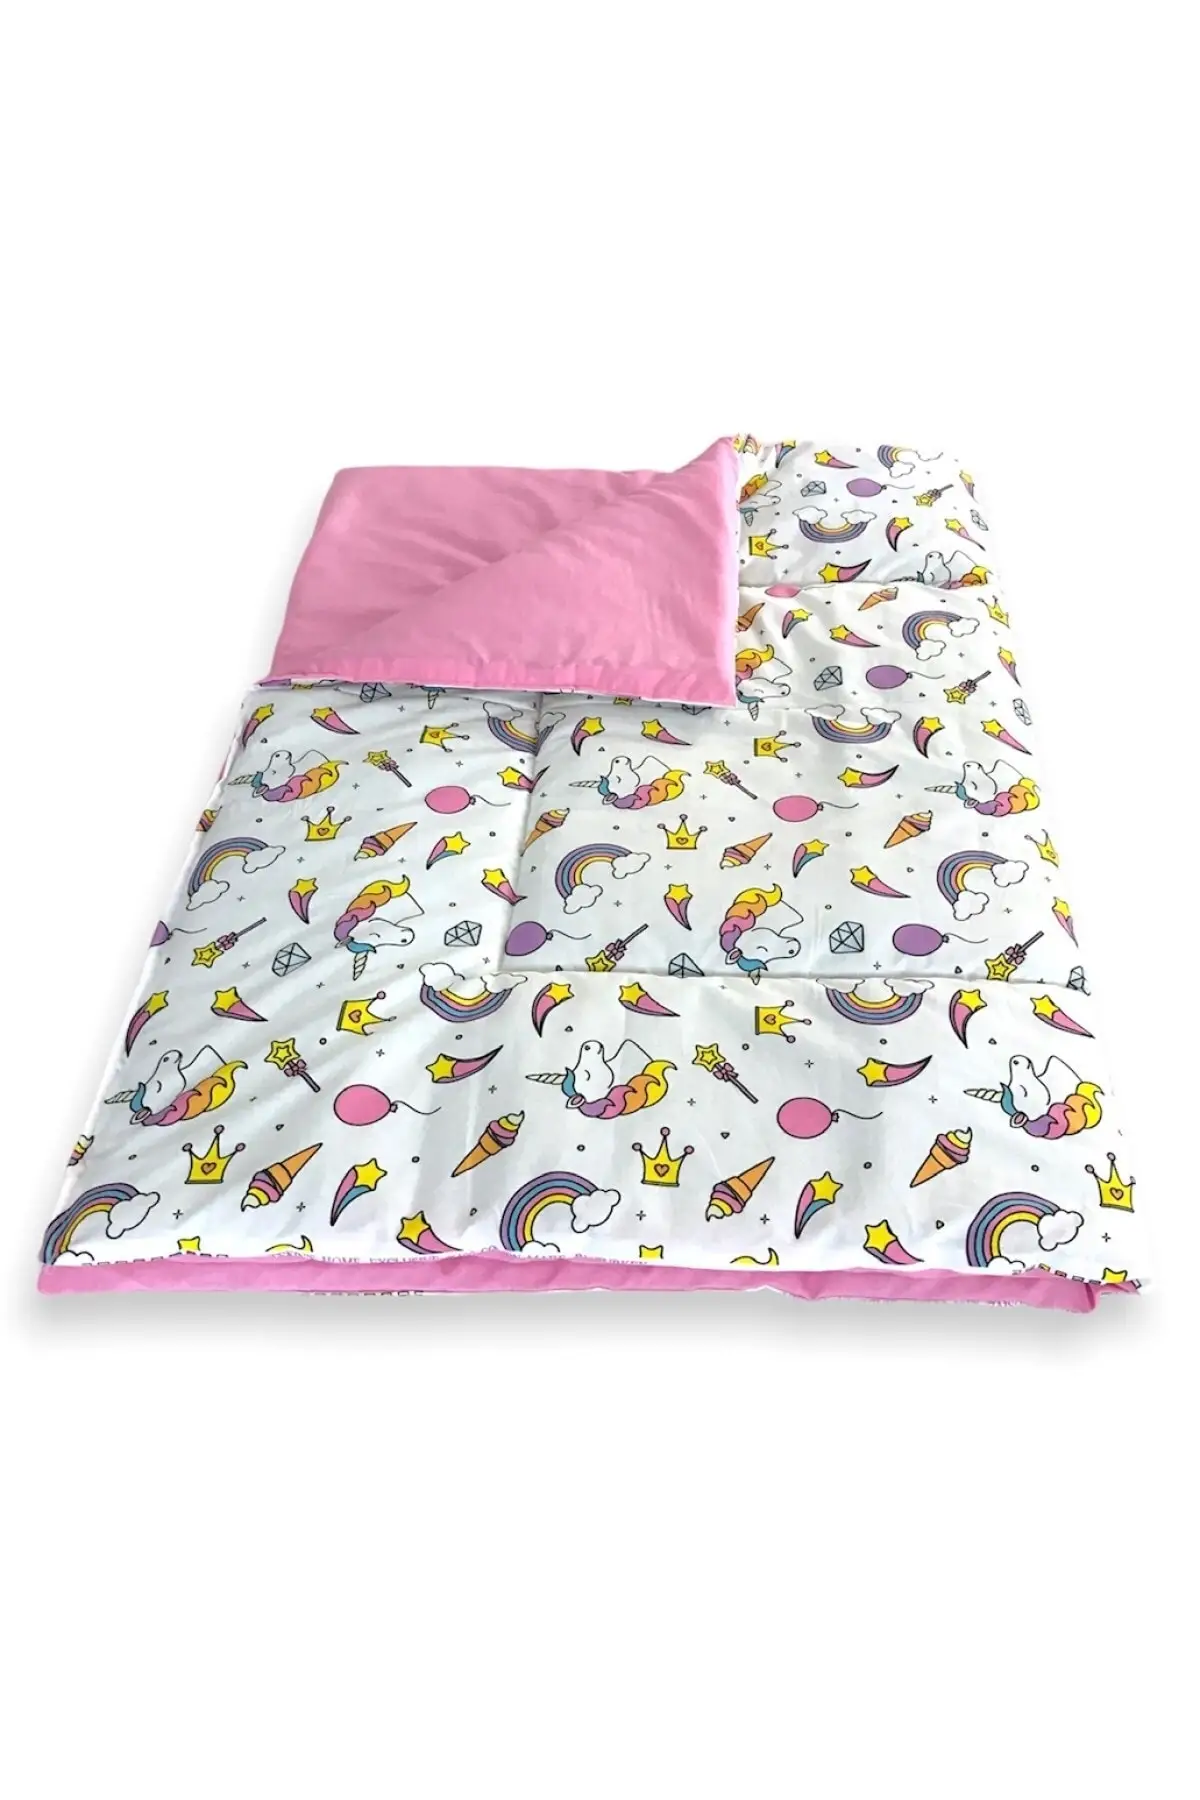 Cotton Baby Child Quilt Quilting 130x200 Cm White Unicorn Pink Fiber Baby & Child Quilt Home Textile Textile & Furniture